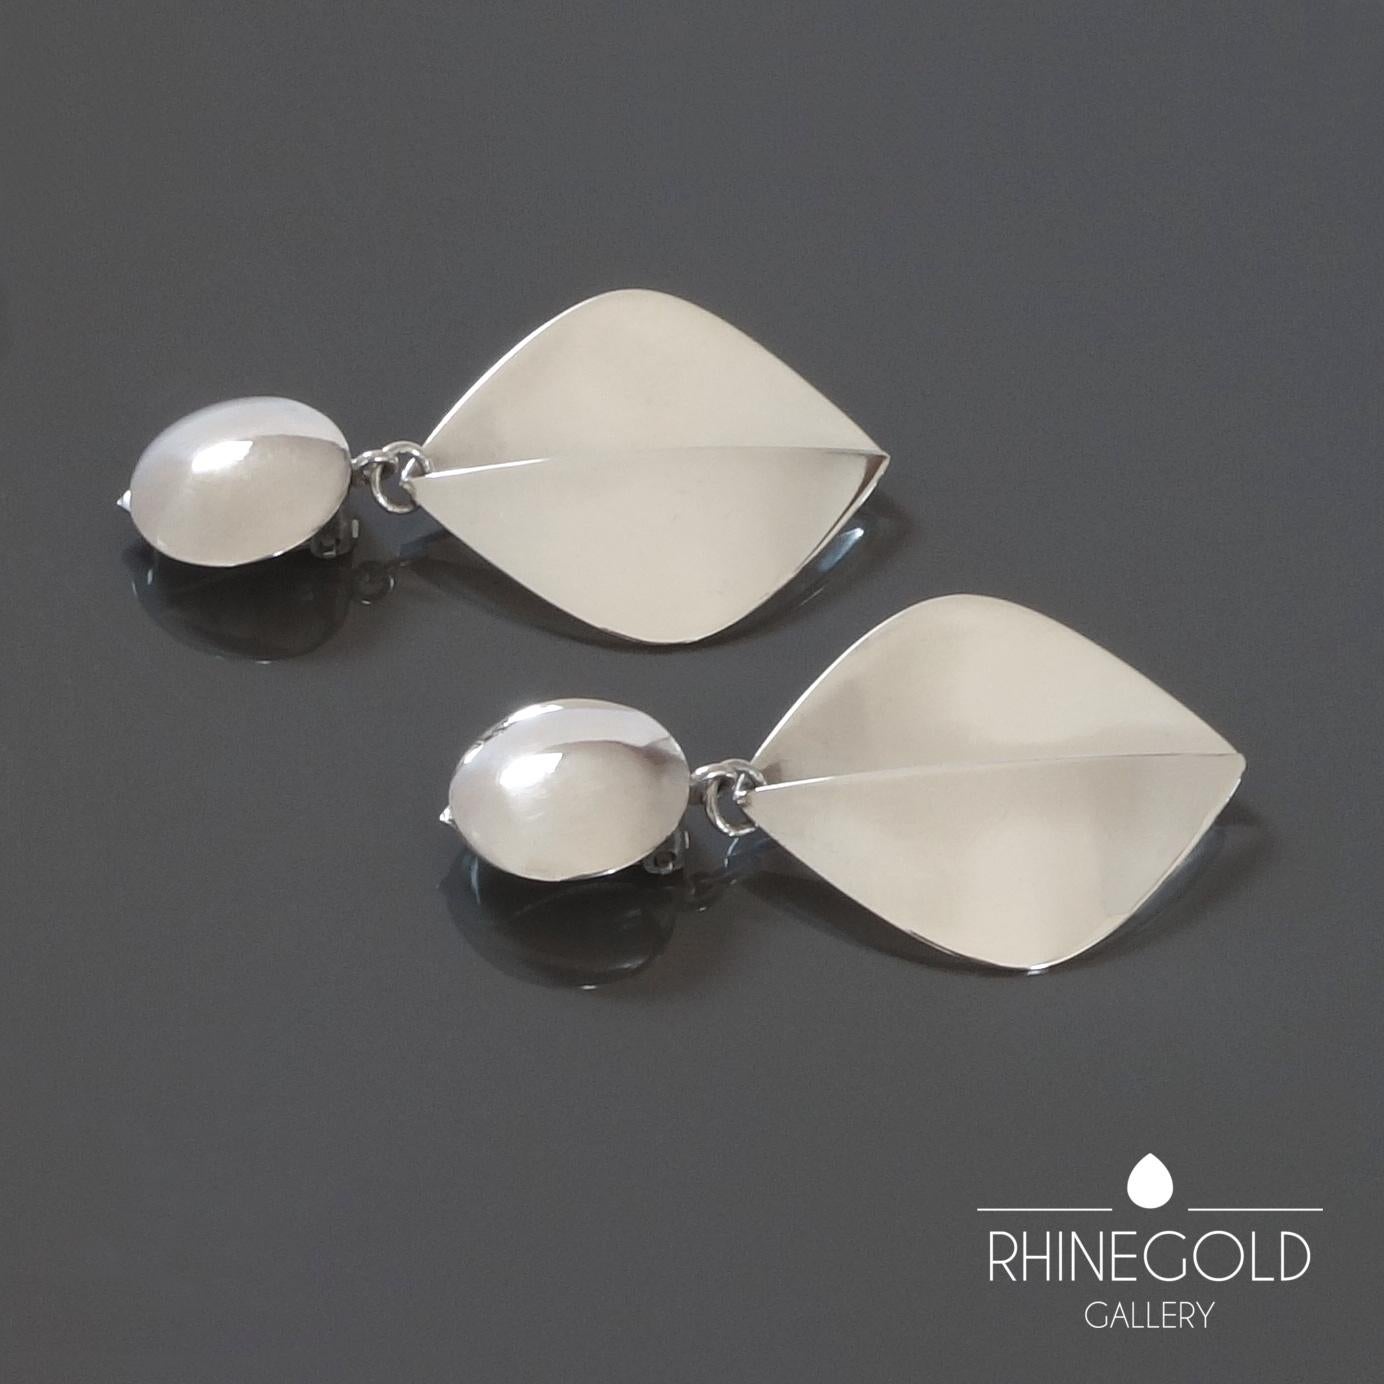 Bent Gabrielsen Pedersen for Georg Jensen: A Pair of Modernist Silver Clip-on Earrings
Sterling silver
Length 5.9 cm, width 3.0 cm (approx. 2 5/16